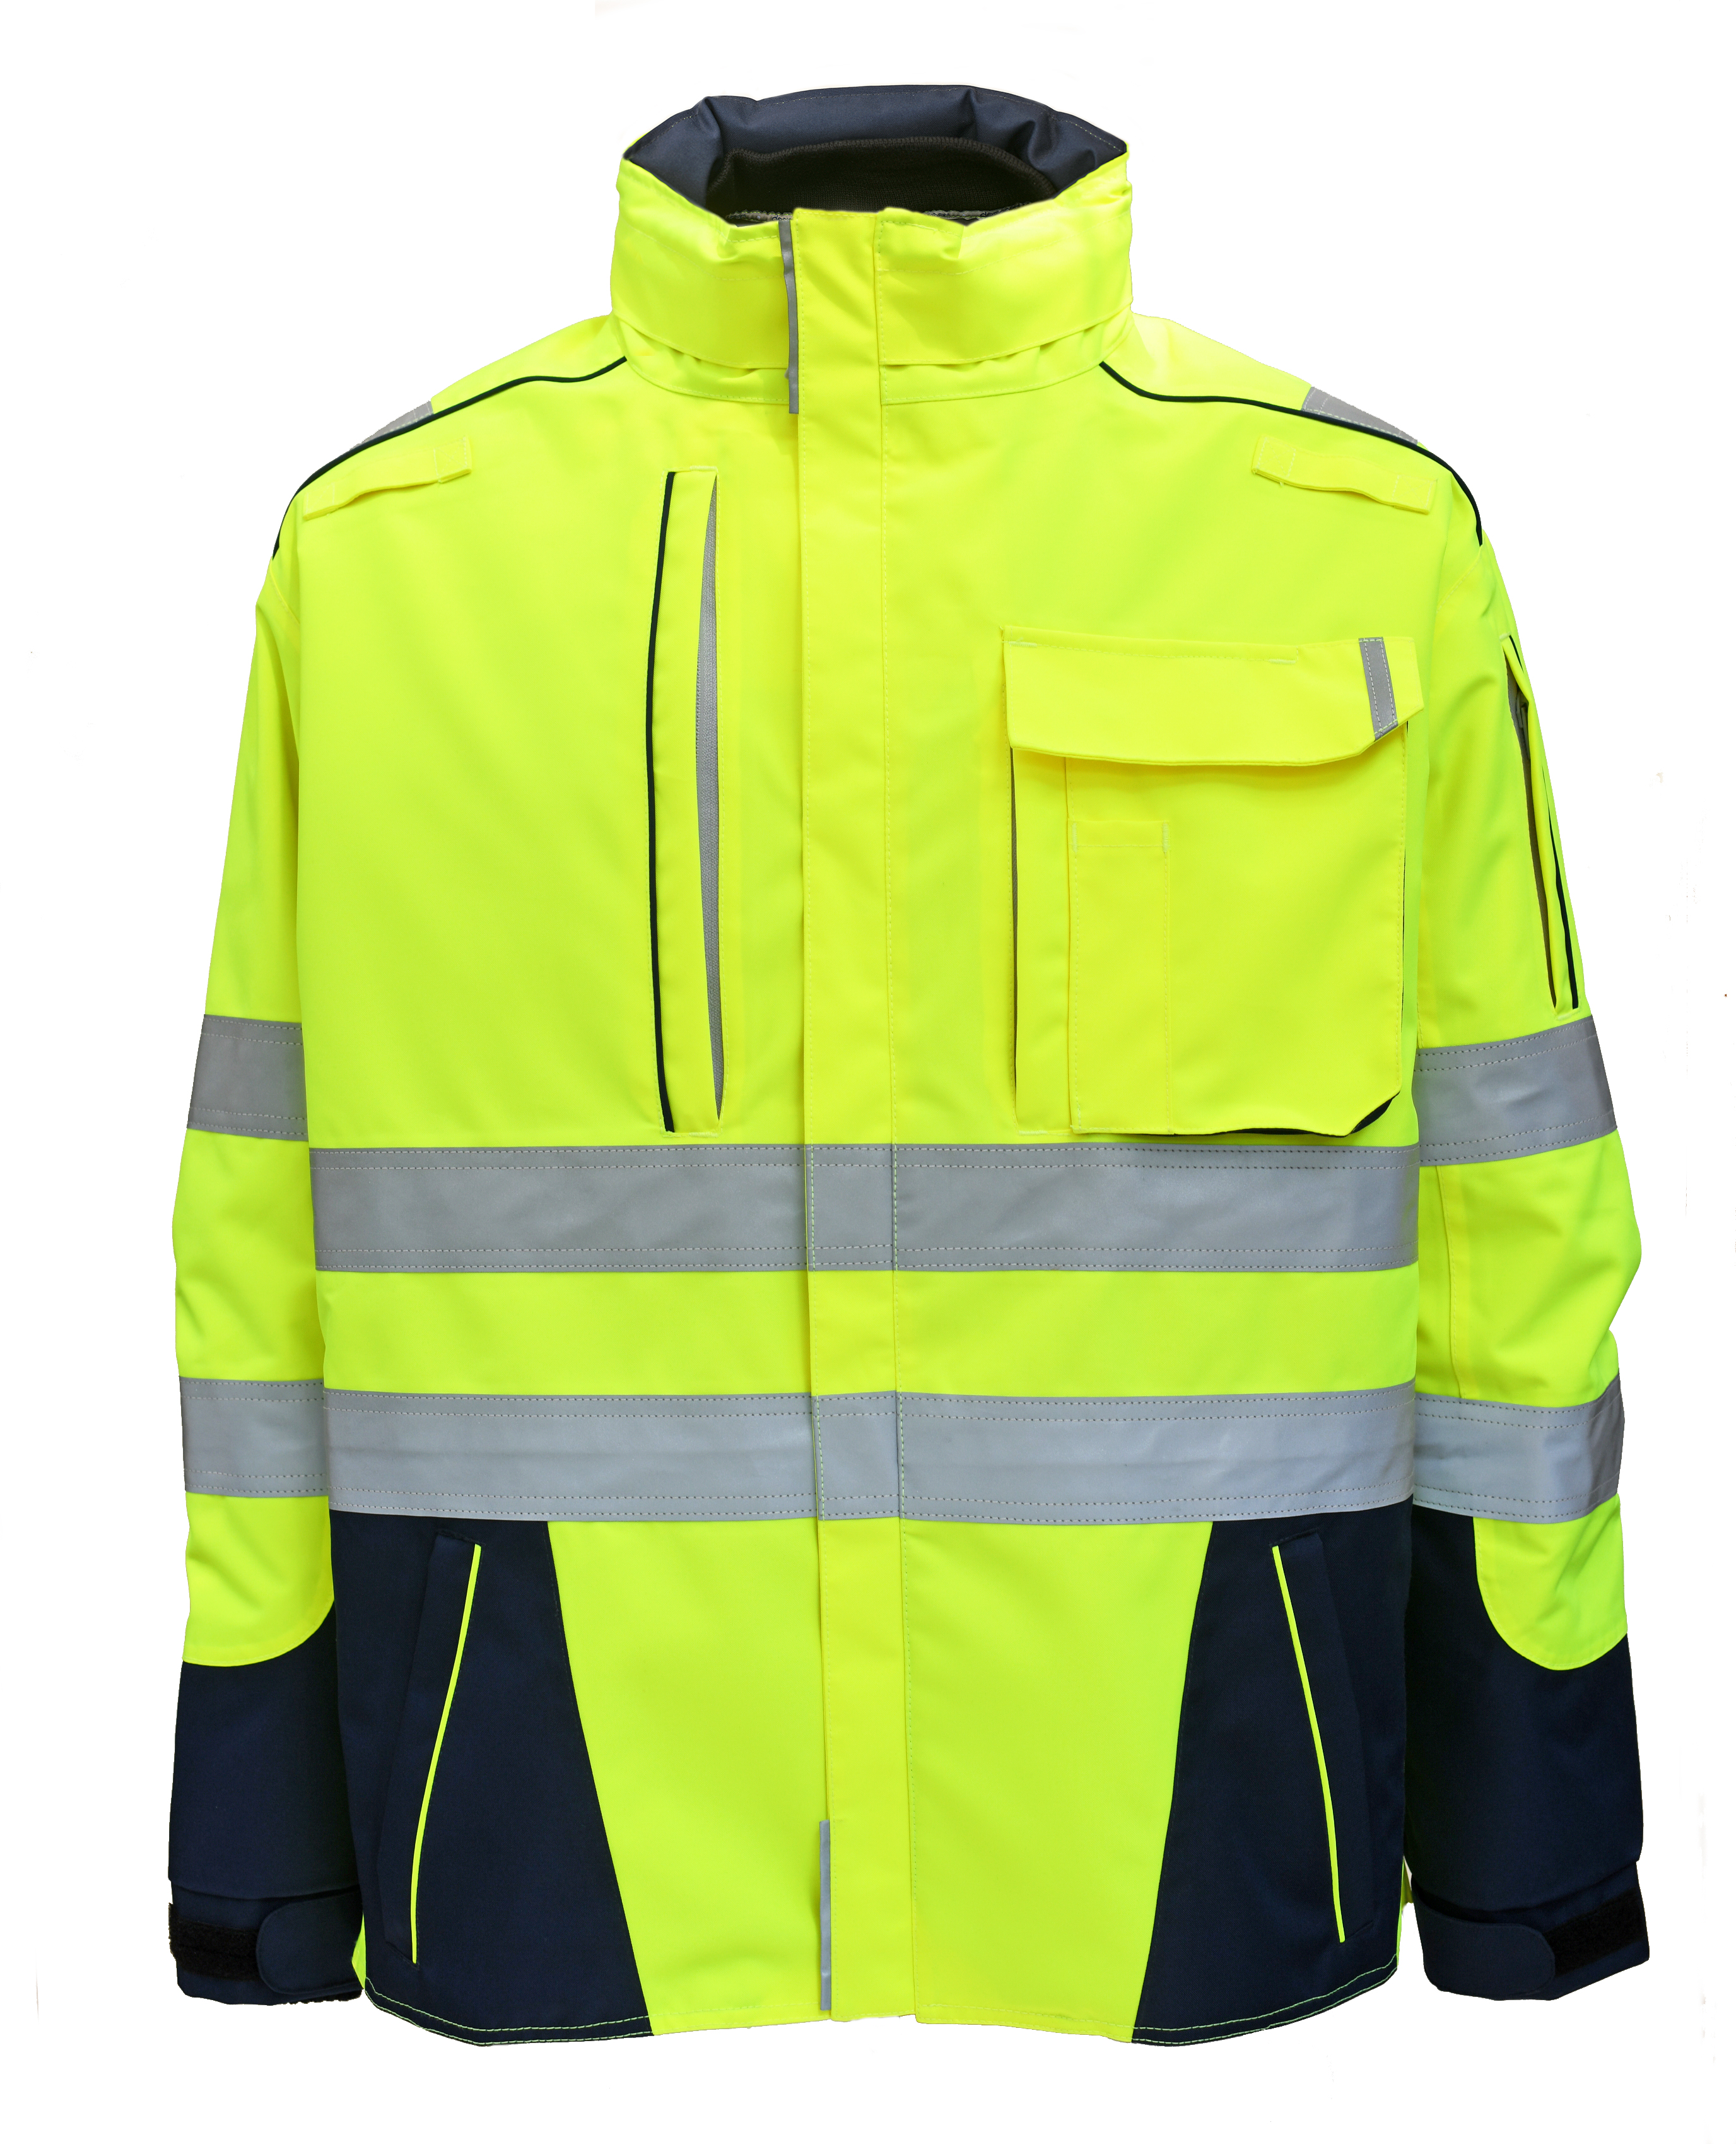 Rescuewear Midi-Parker 33858 Dynamic HiVis Klasse 3 Marineblau / Neon Gelb `W-Linie`